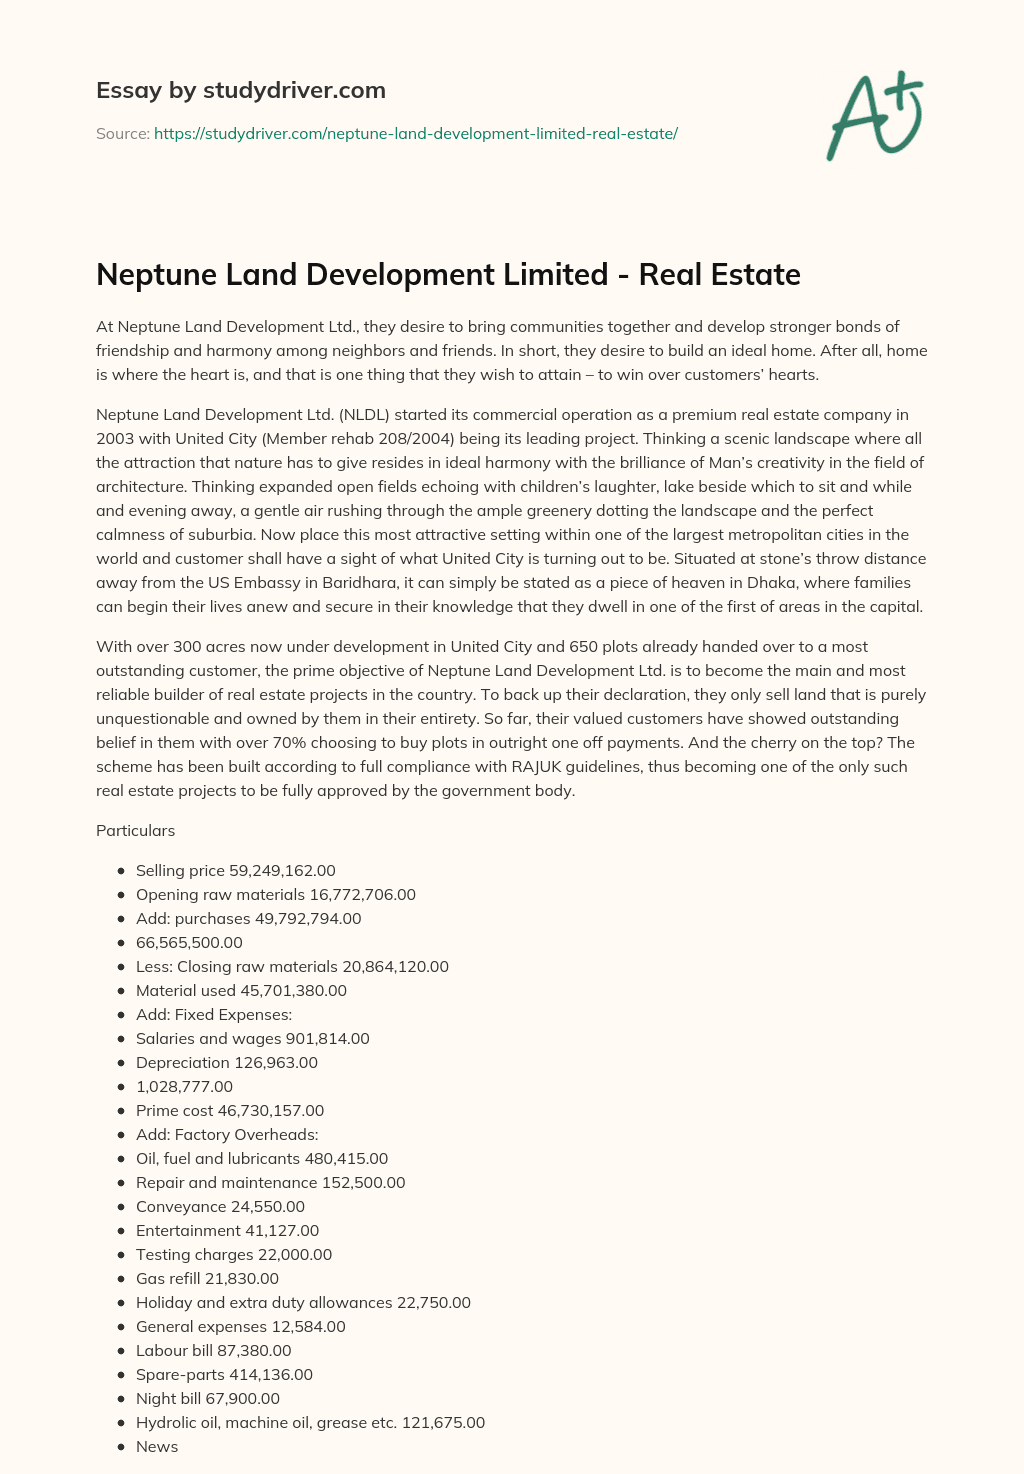 Neptune Land Development Limited – Real Estate essay